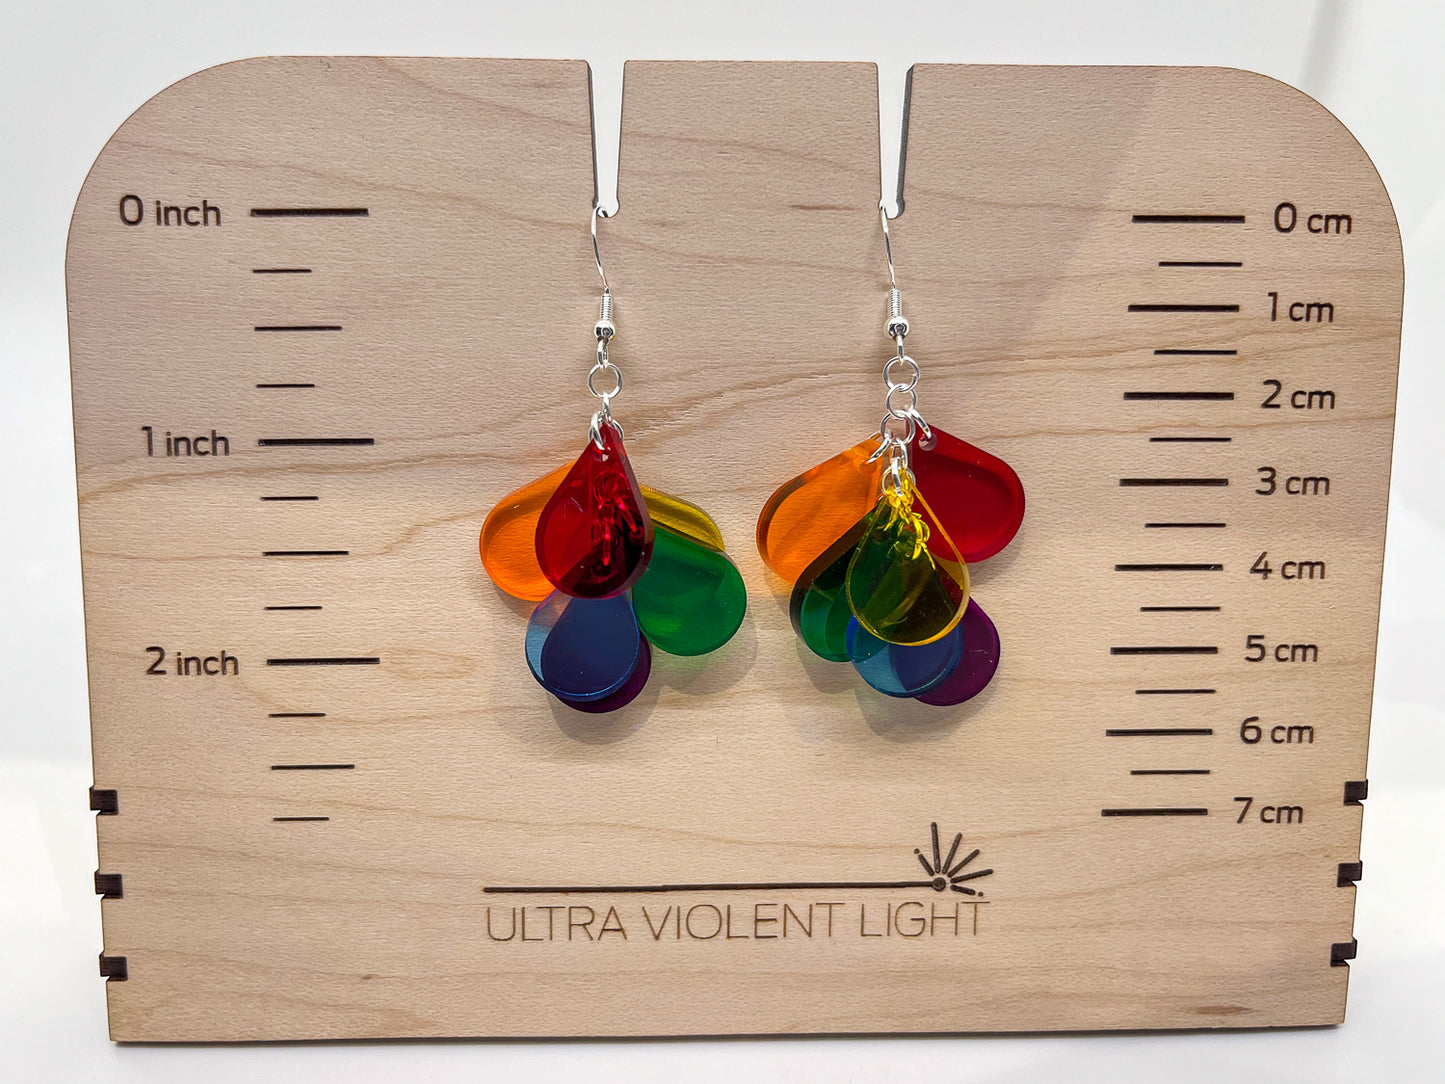 Multicolor Sundrop rainbow dangle earrings